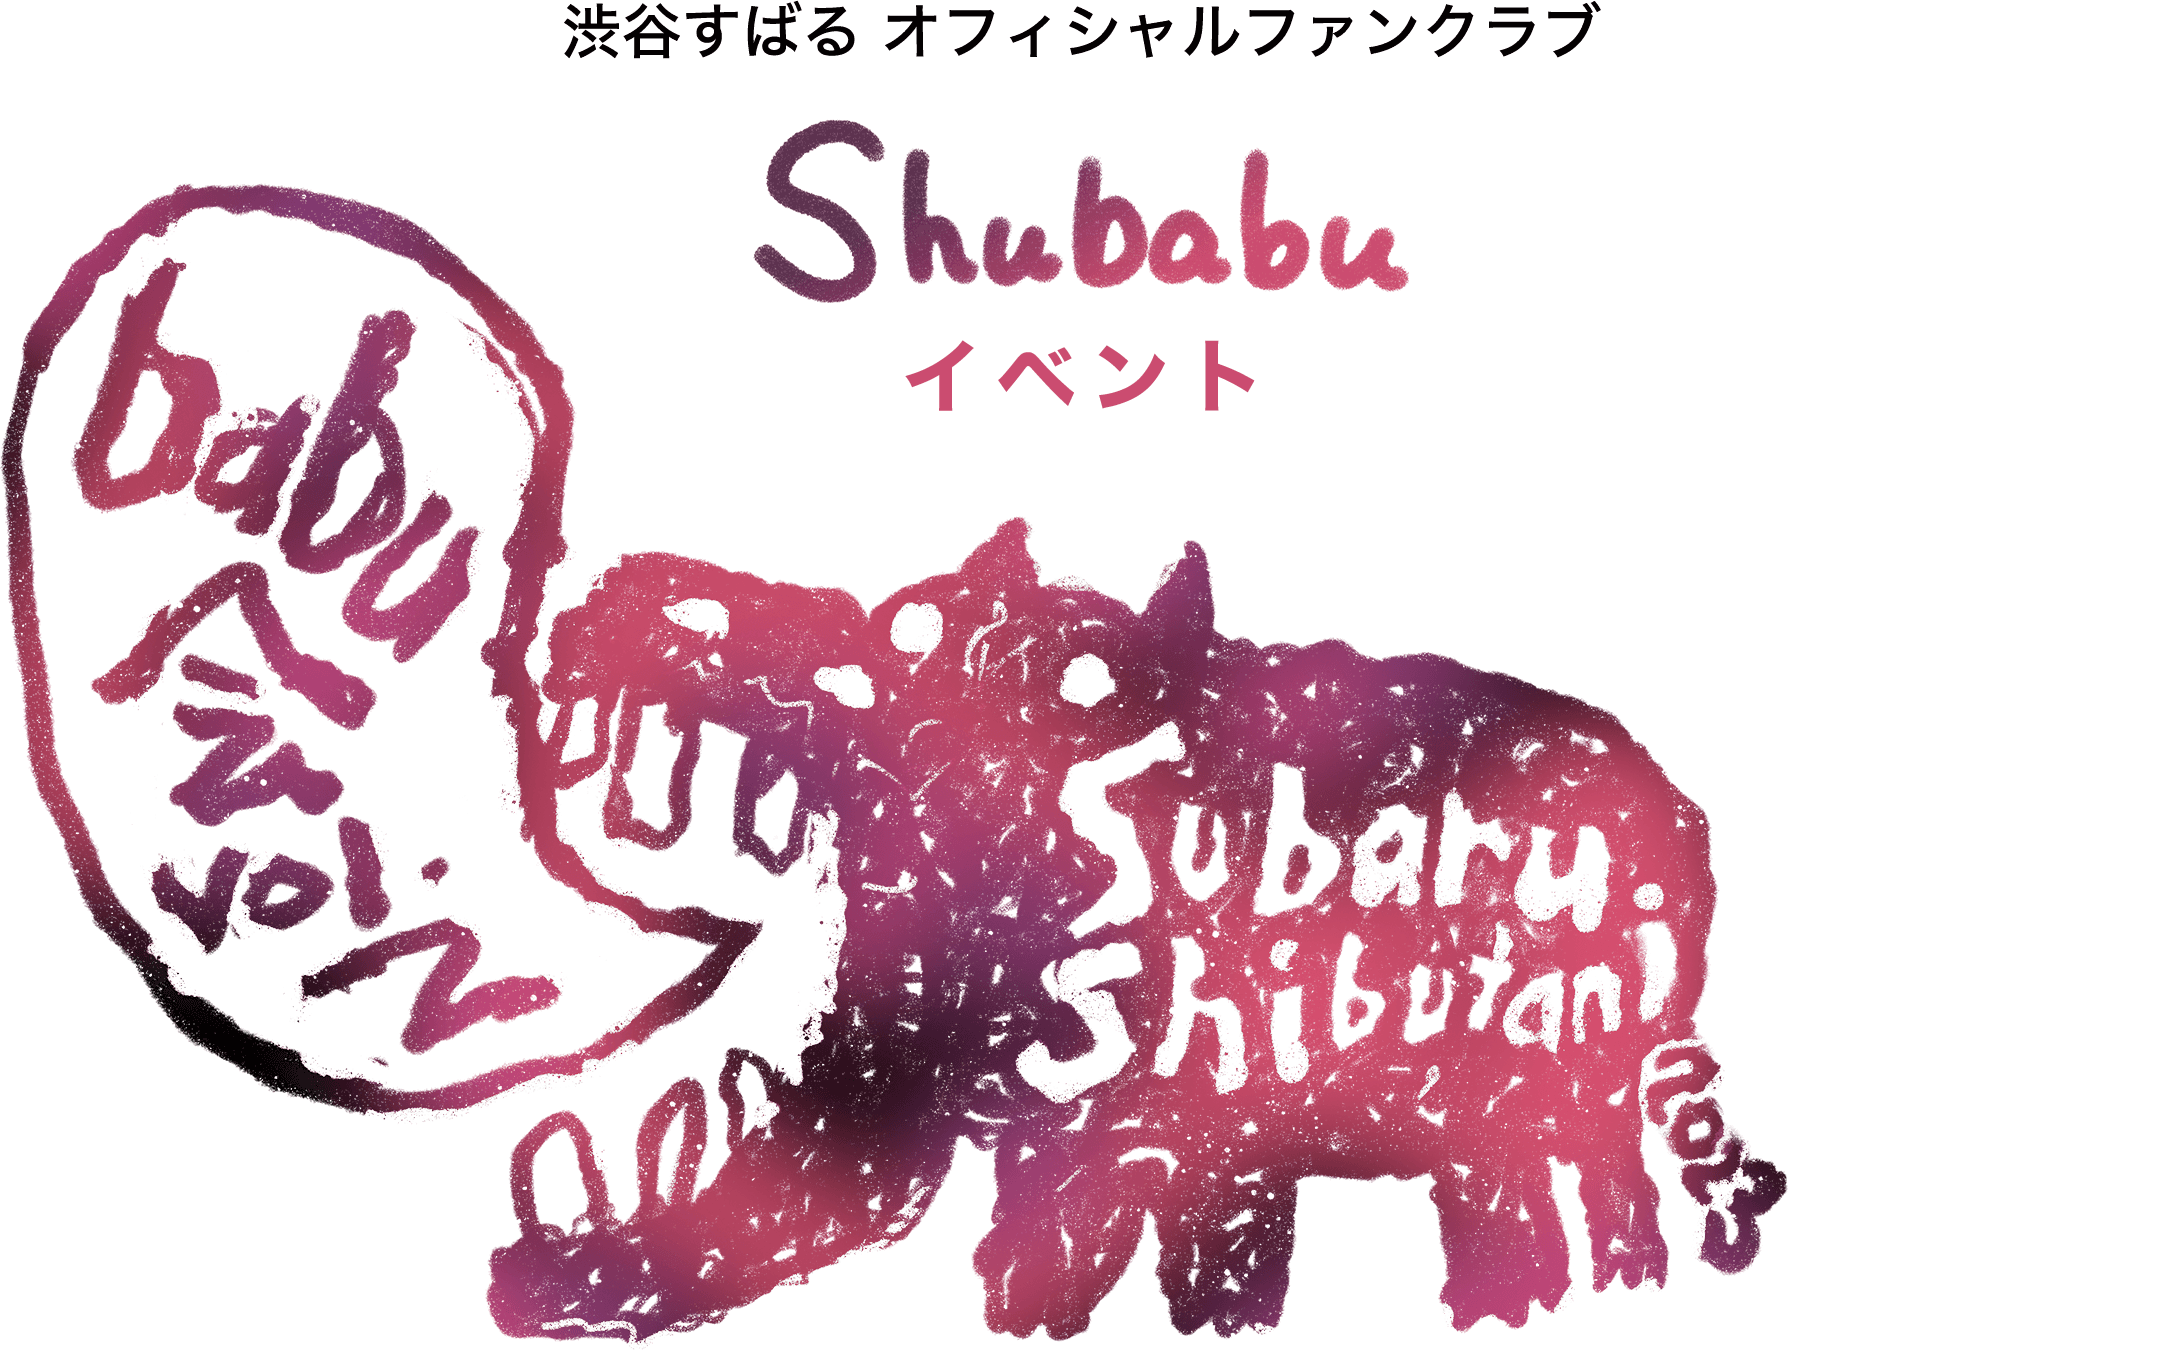 Shubabu会員限定イベント babu会 vol.2 開催決定